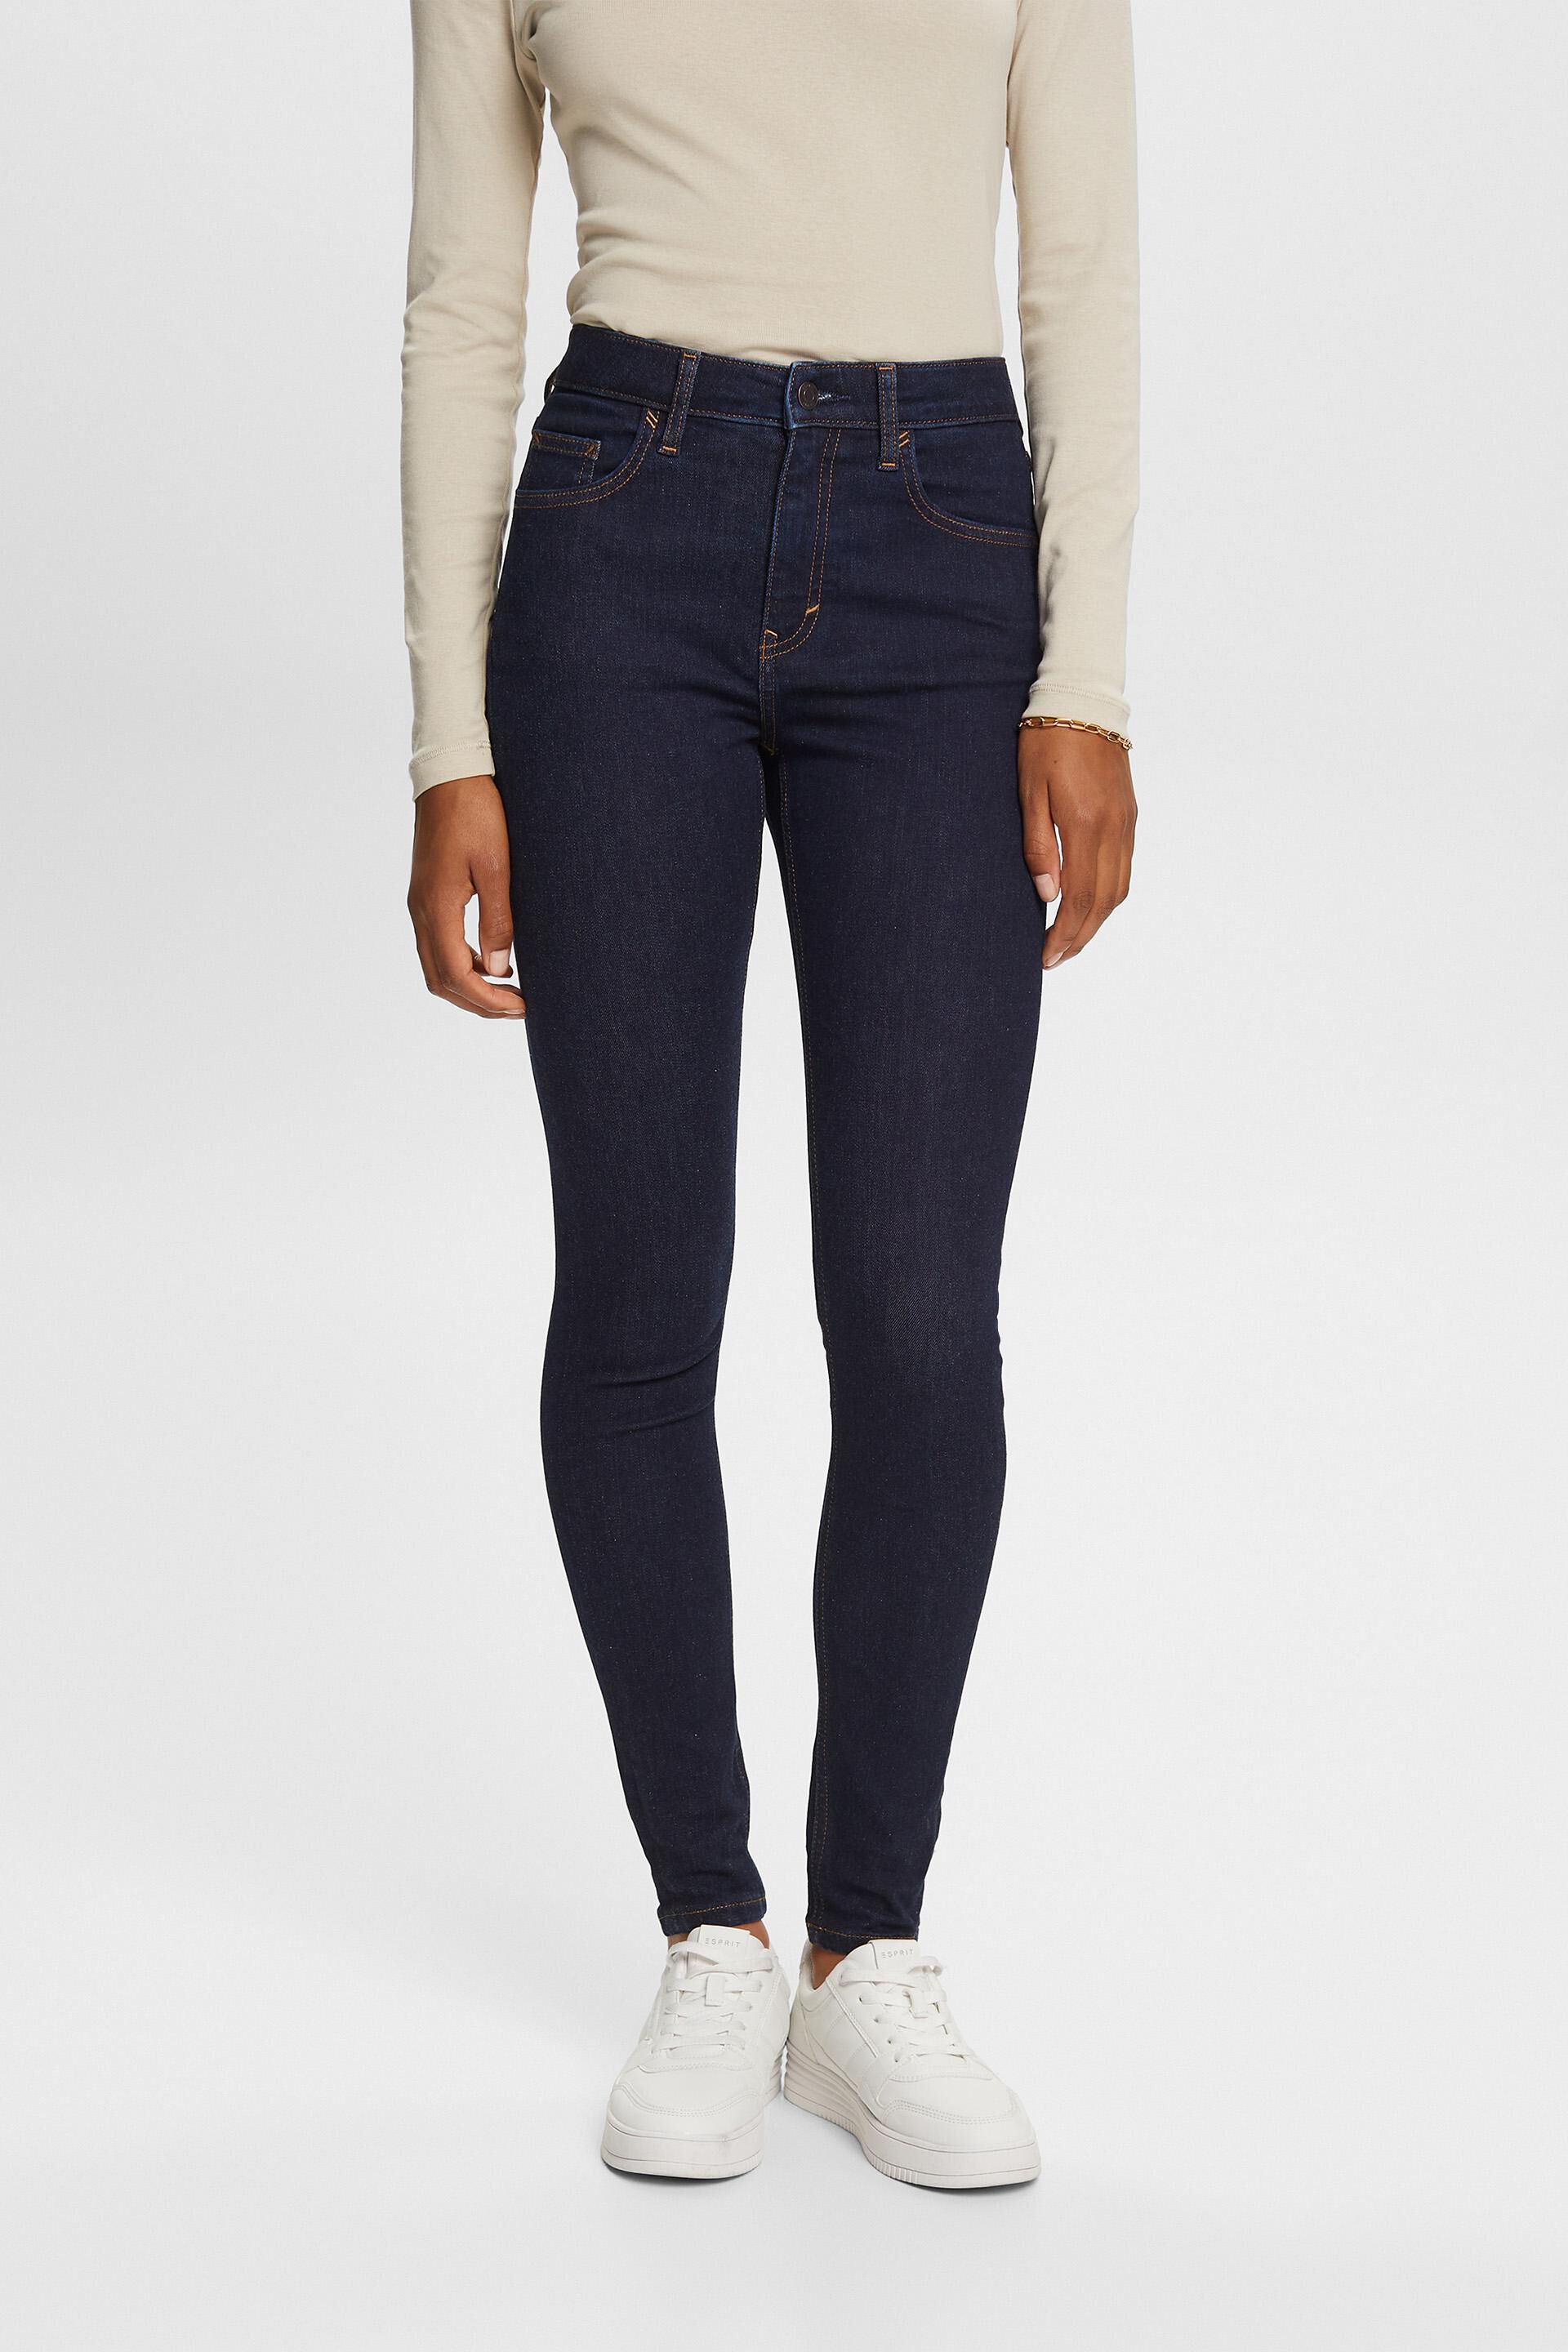 Esprit cotton skinny jeans, stretch Highrise